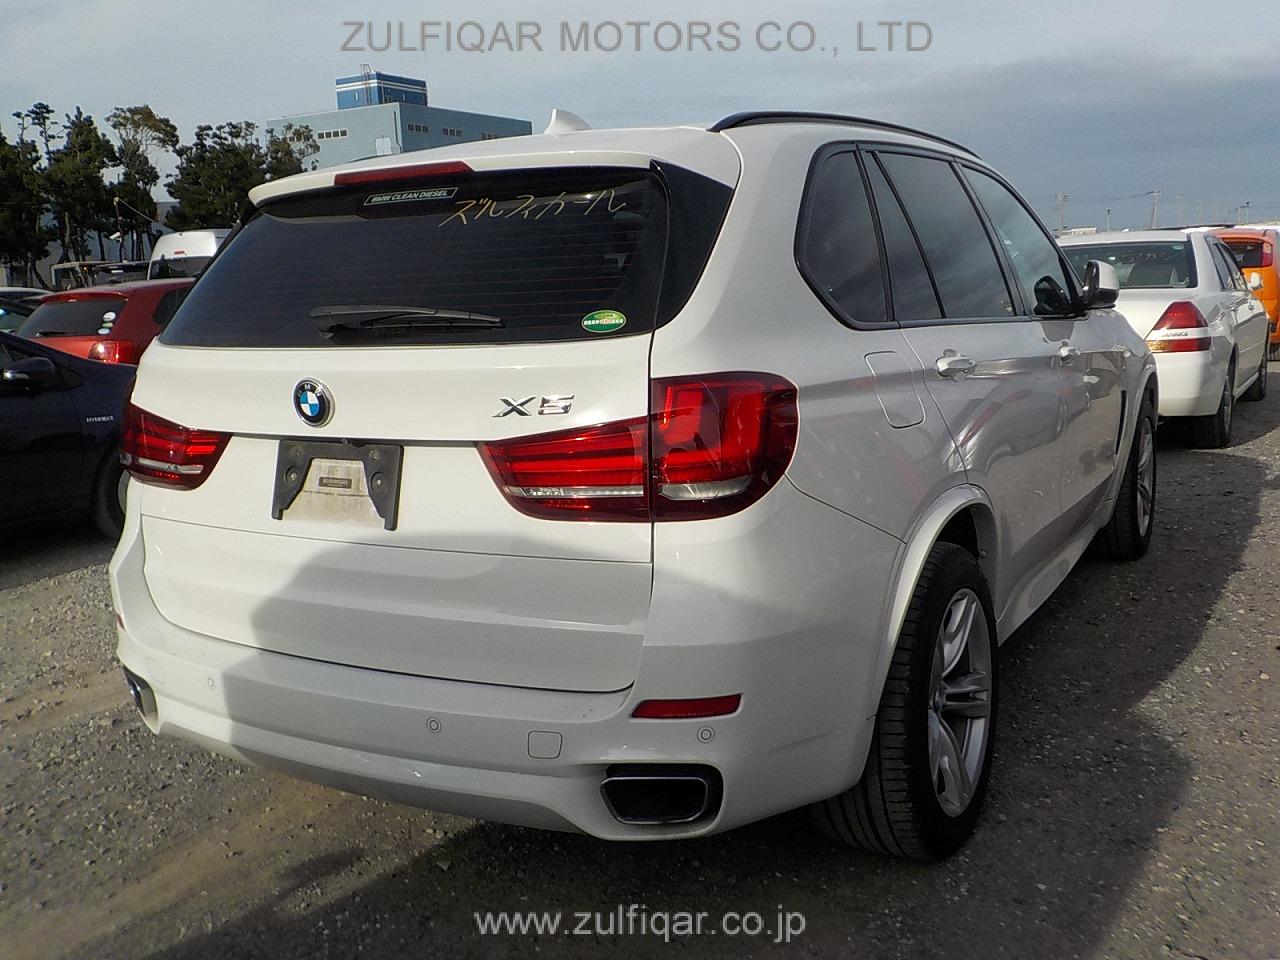 BMW X5 2016 Image 51